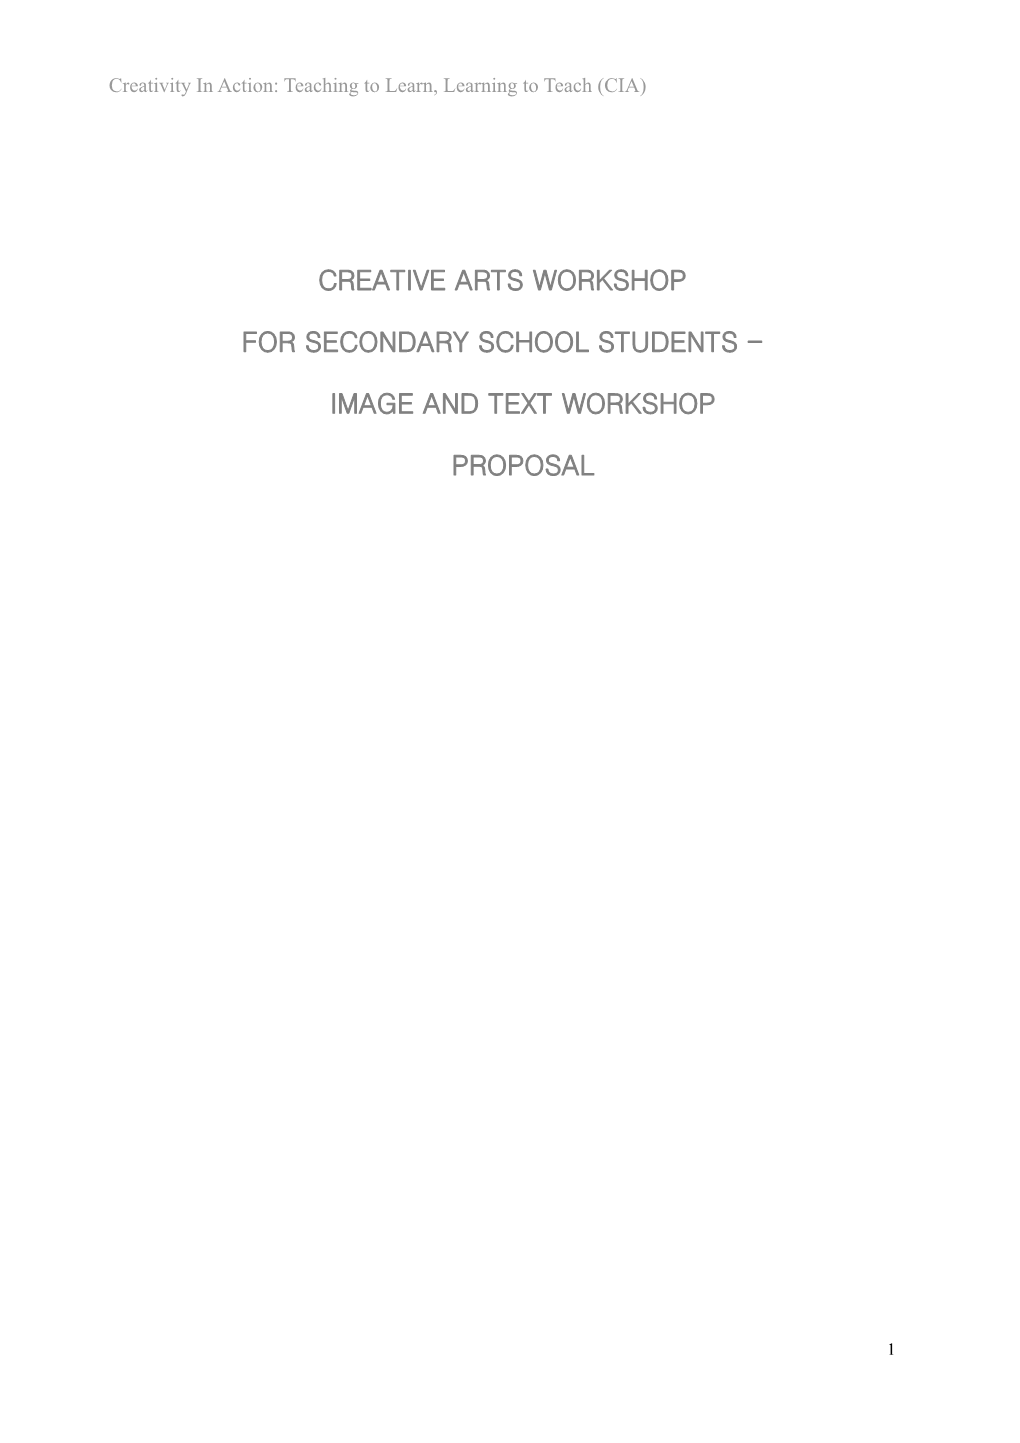 Creative Arts Workshop